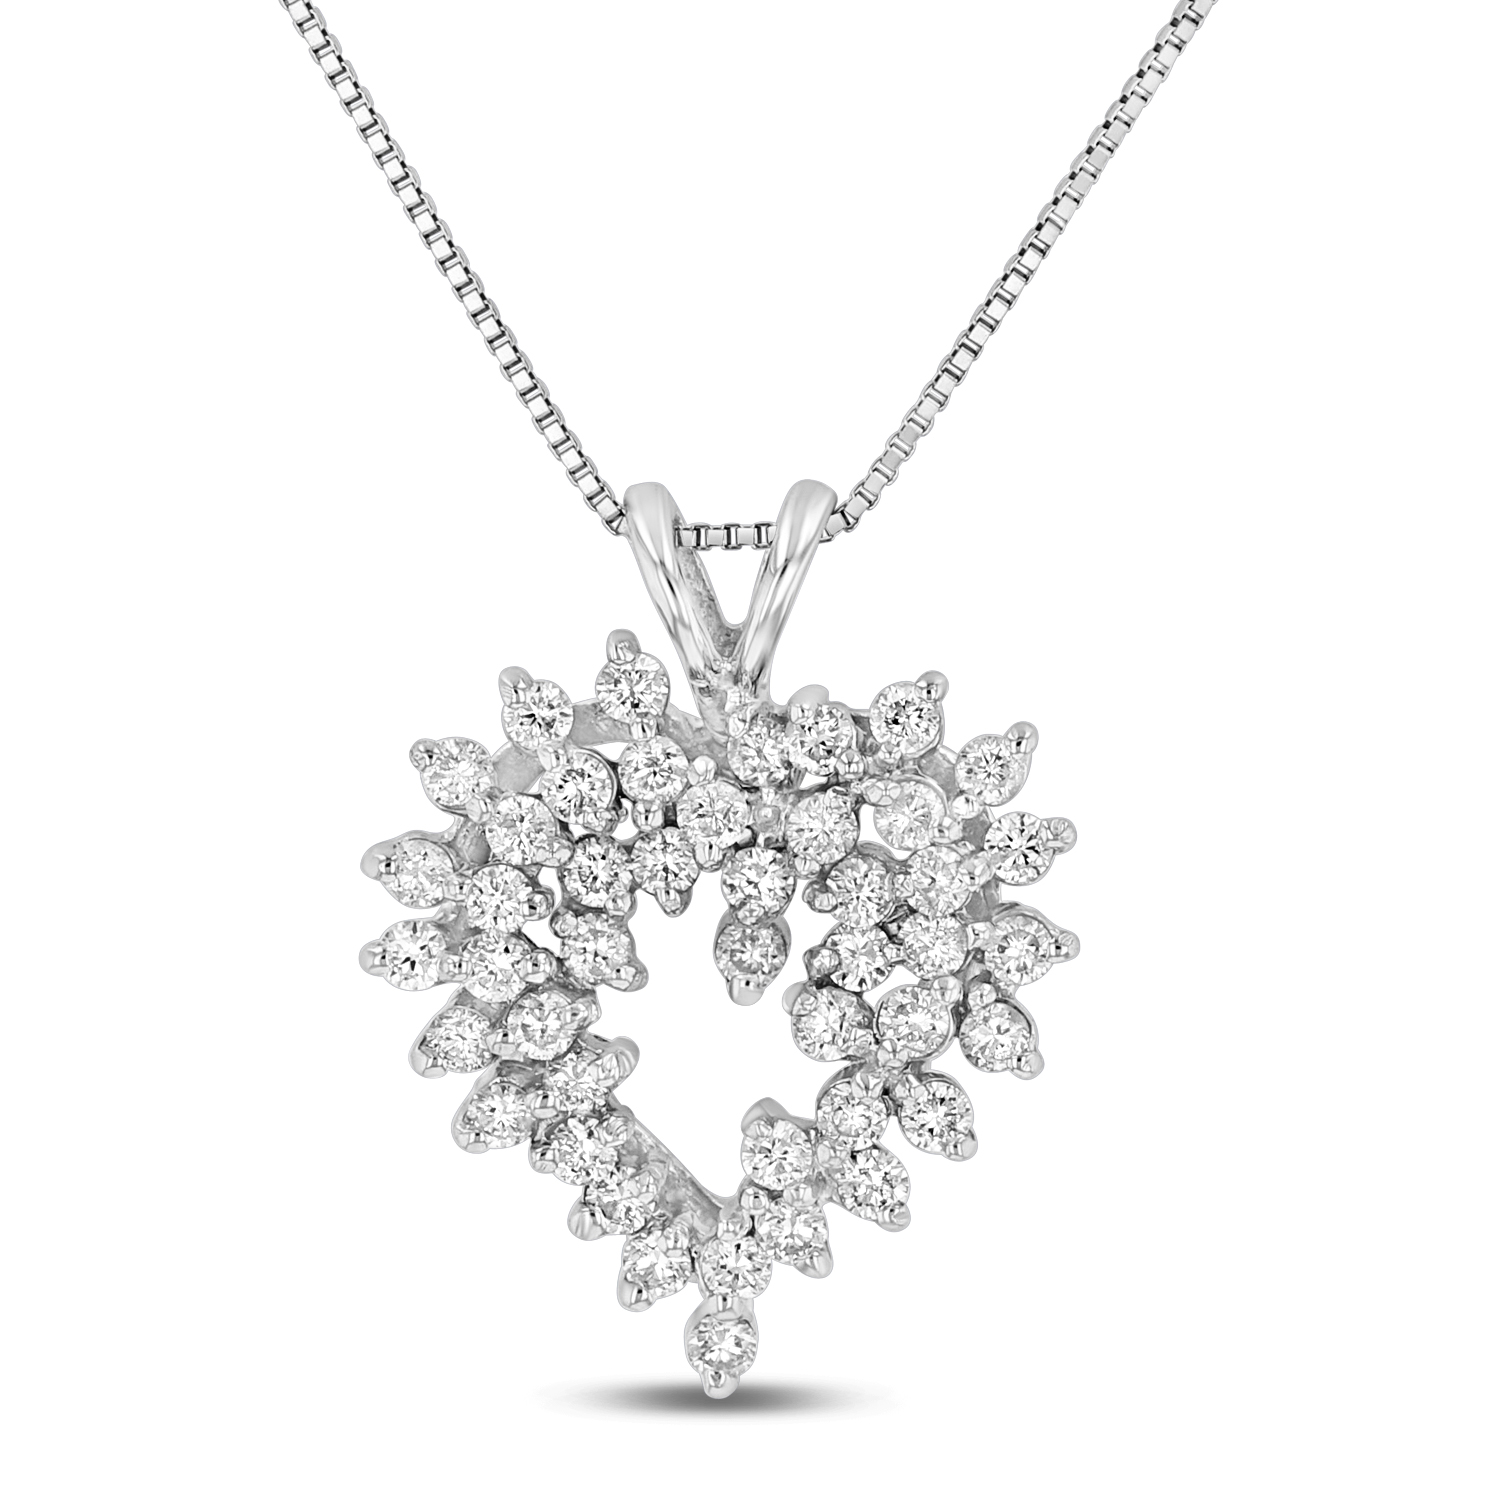 View 0.65ctw Diamond Heart Pendant in 14k White Gold